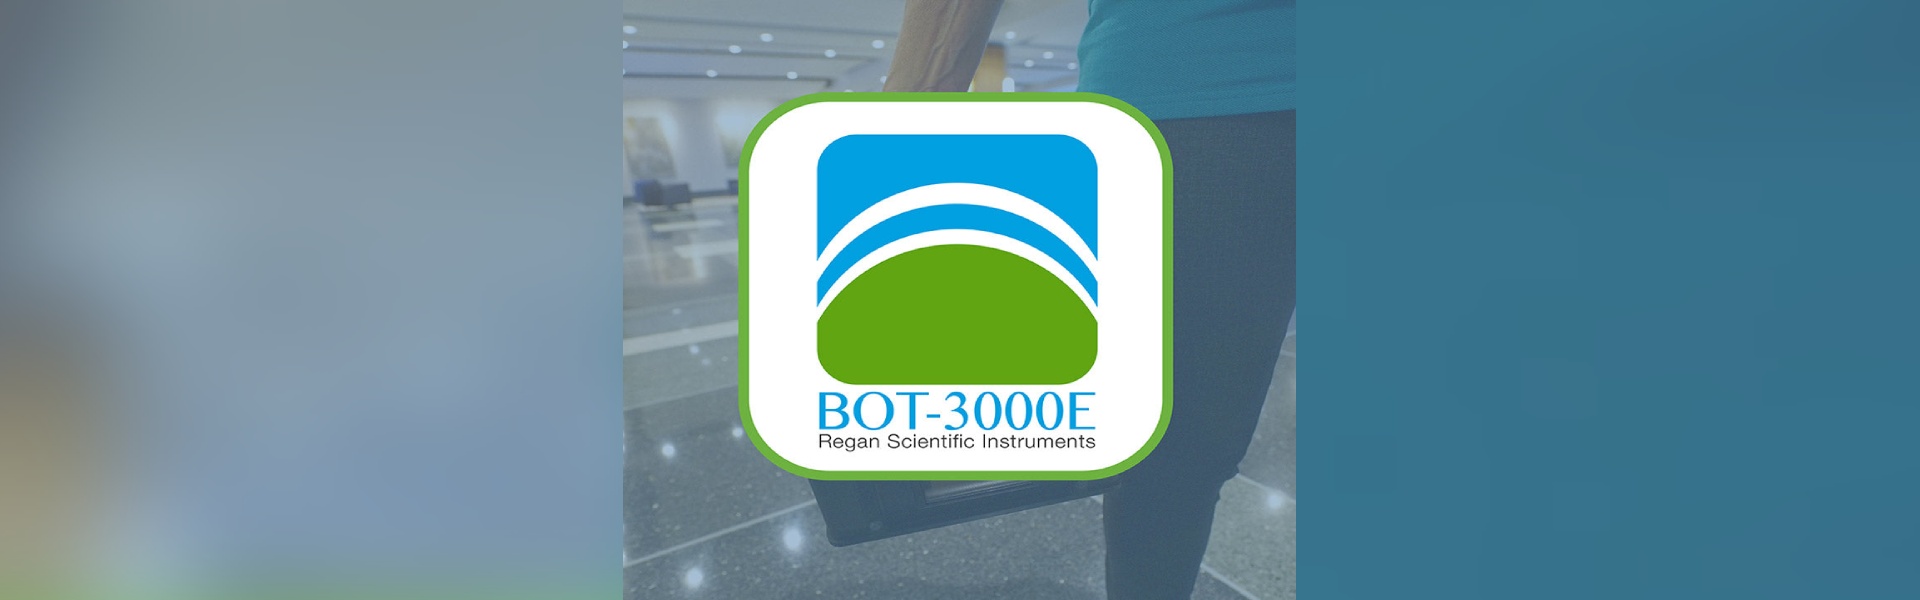 BOT 3000E Regan scientific instruments logo